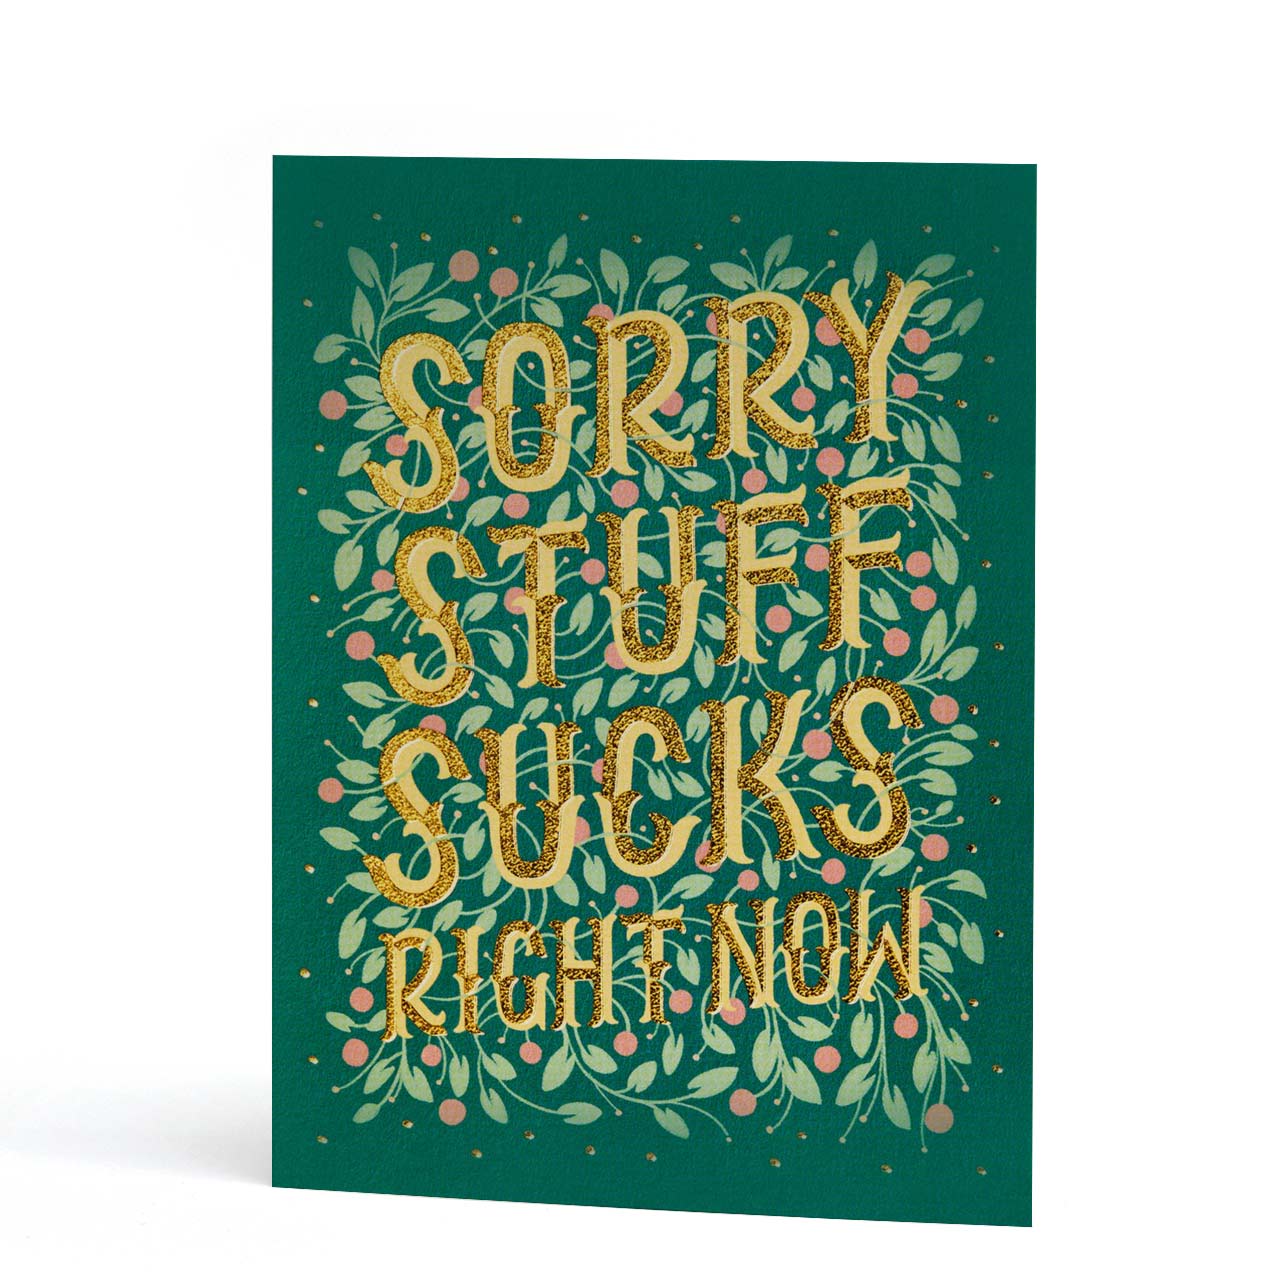 Sorry Stuff Sucks Gold Foil Greeting Card